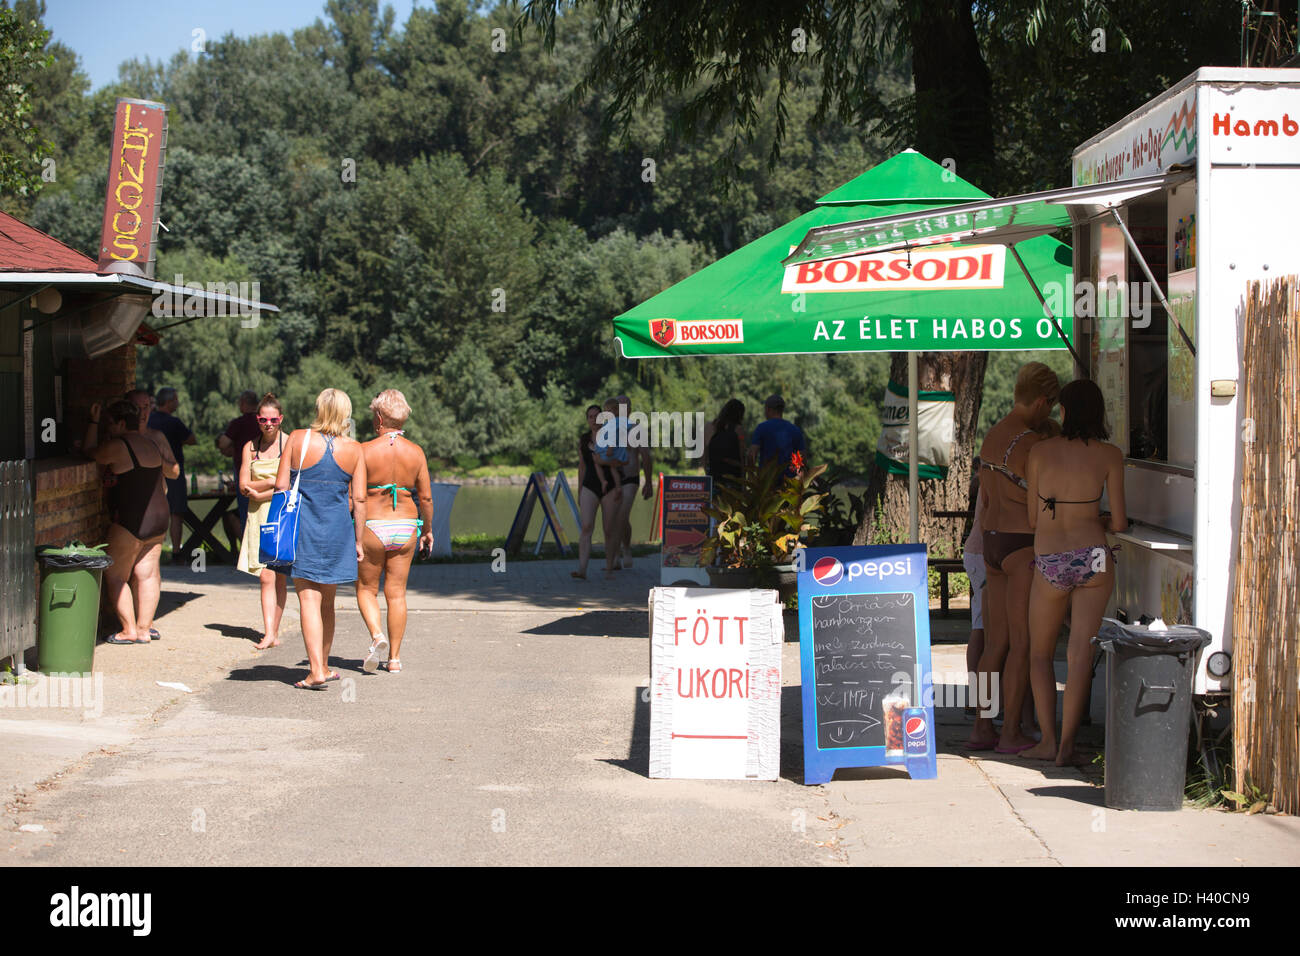 Hungarians enjoying the summer temperatures at Koros Torok sandy beach along the River Tisza, Csongrád, Hungary Stock Photo